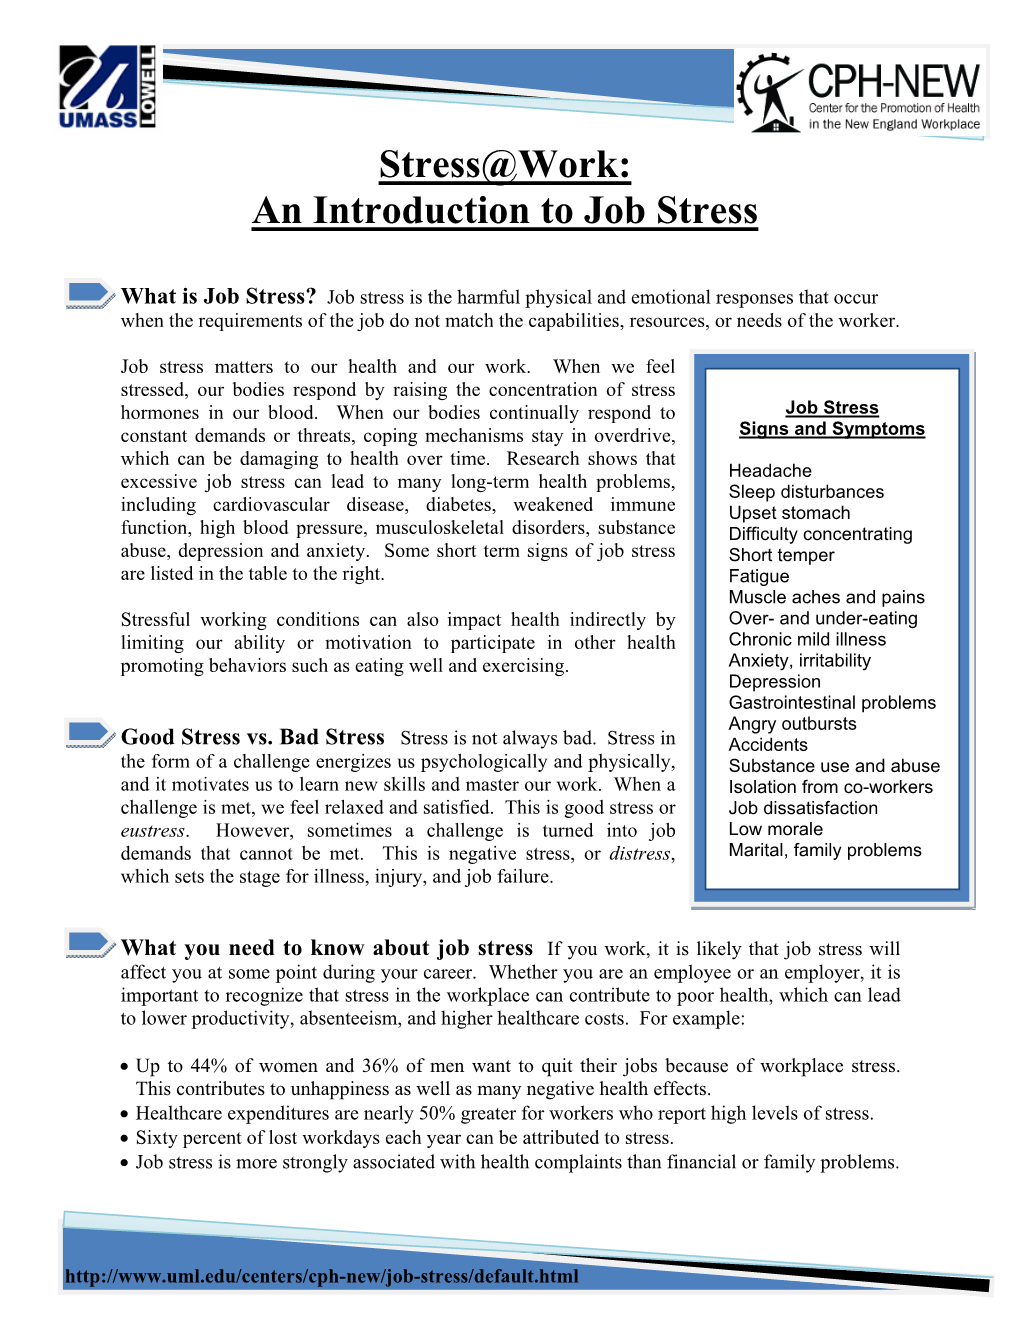 Stress@Work: an Introduction to Job Stress